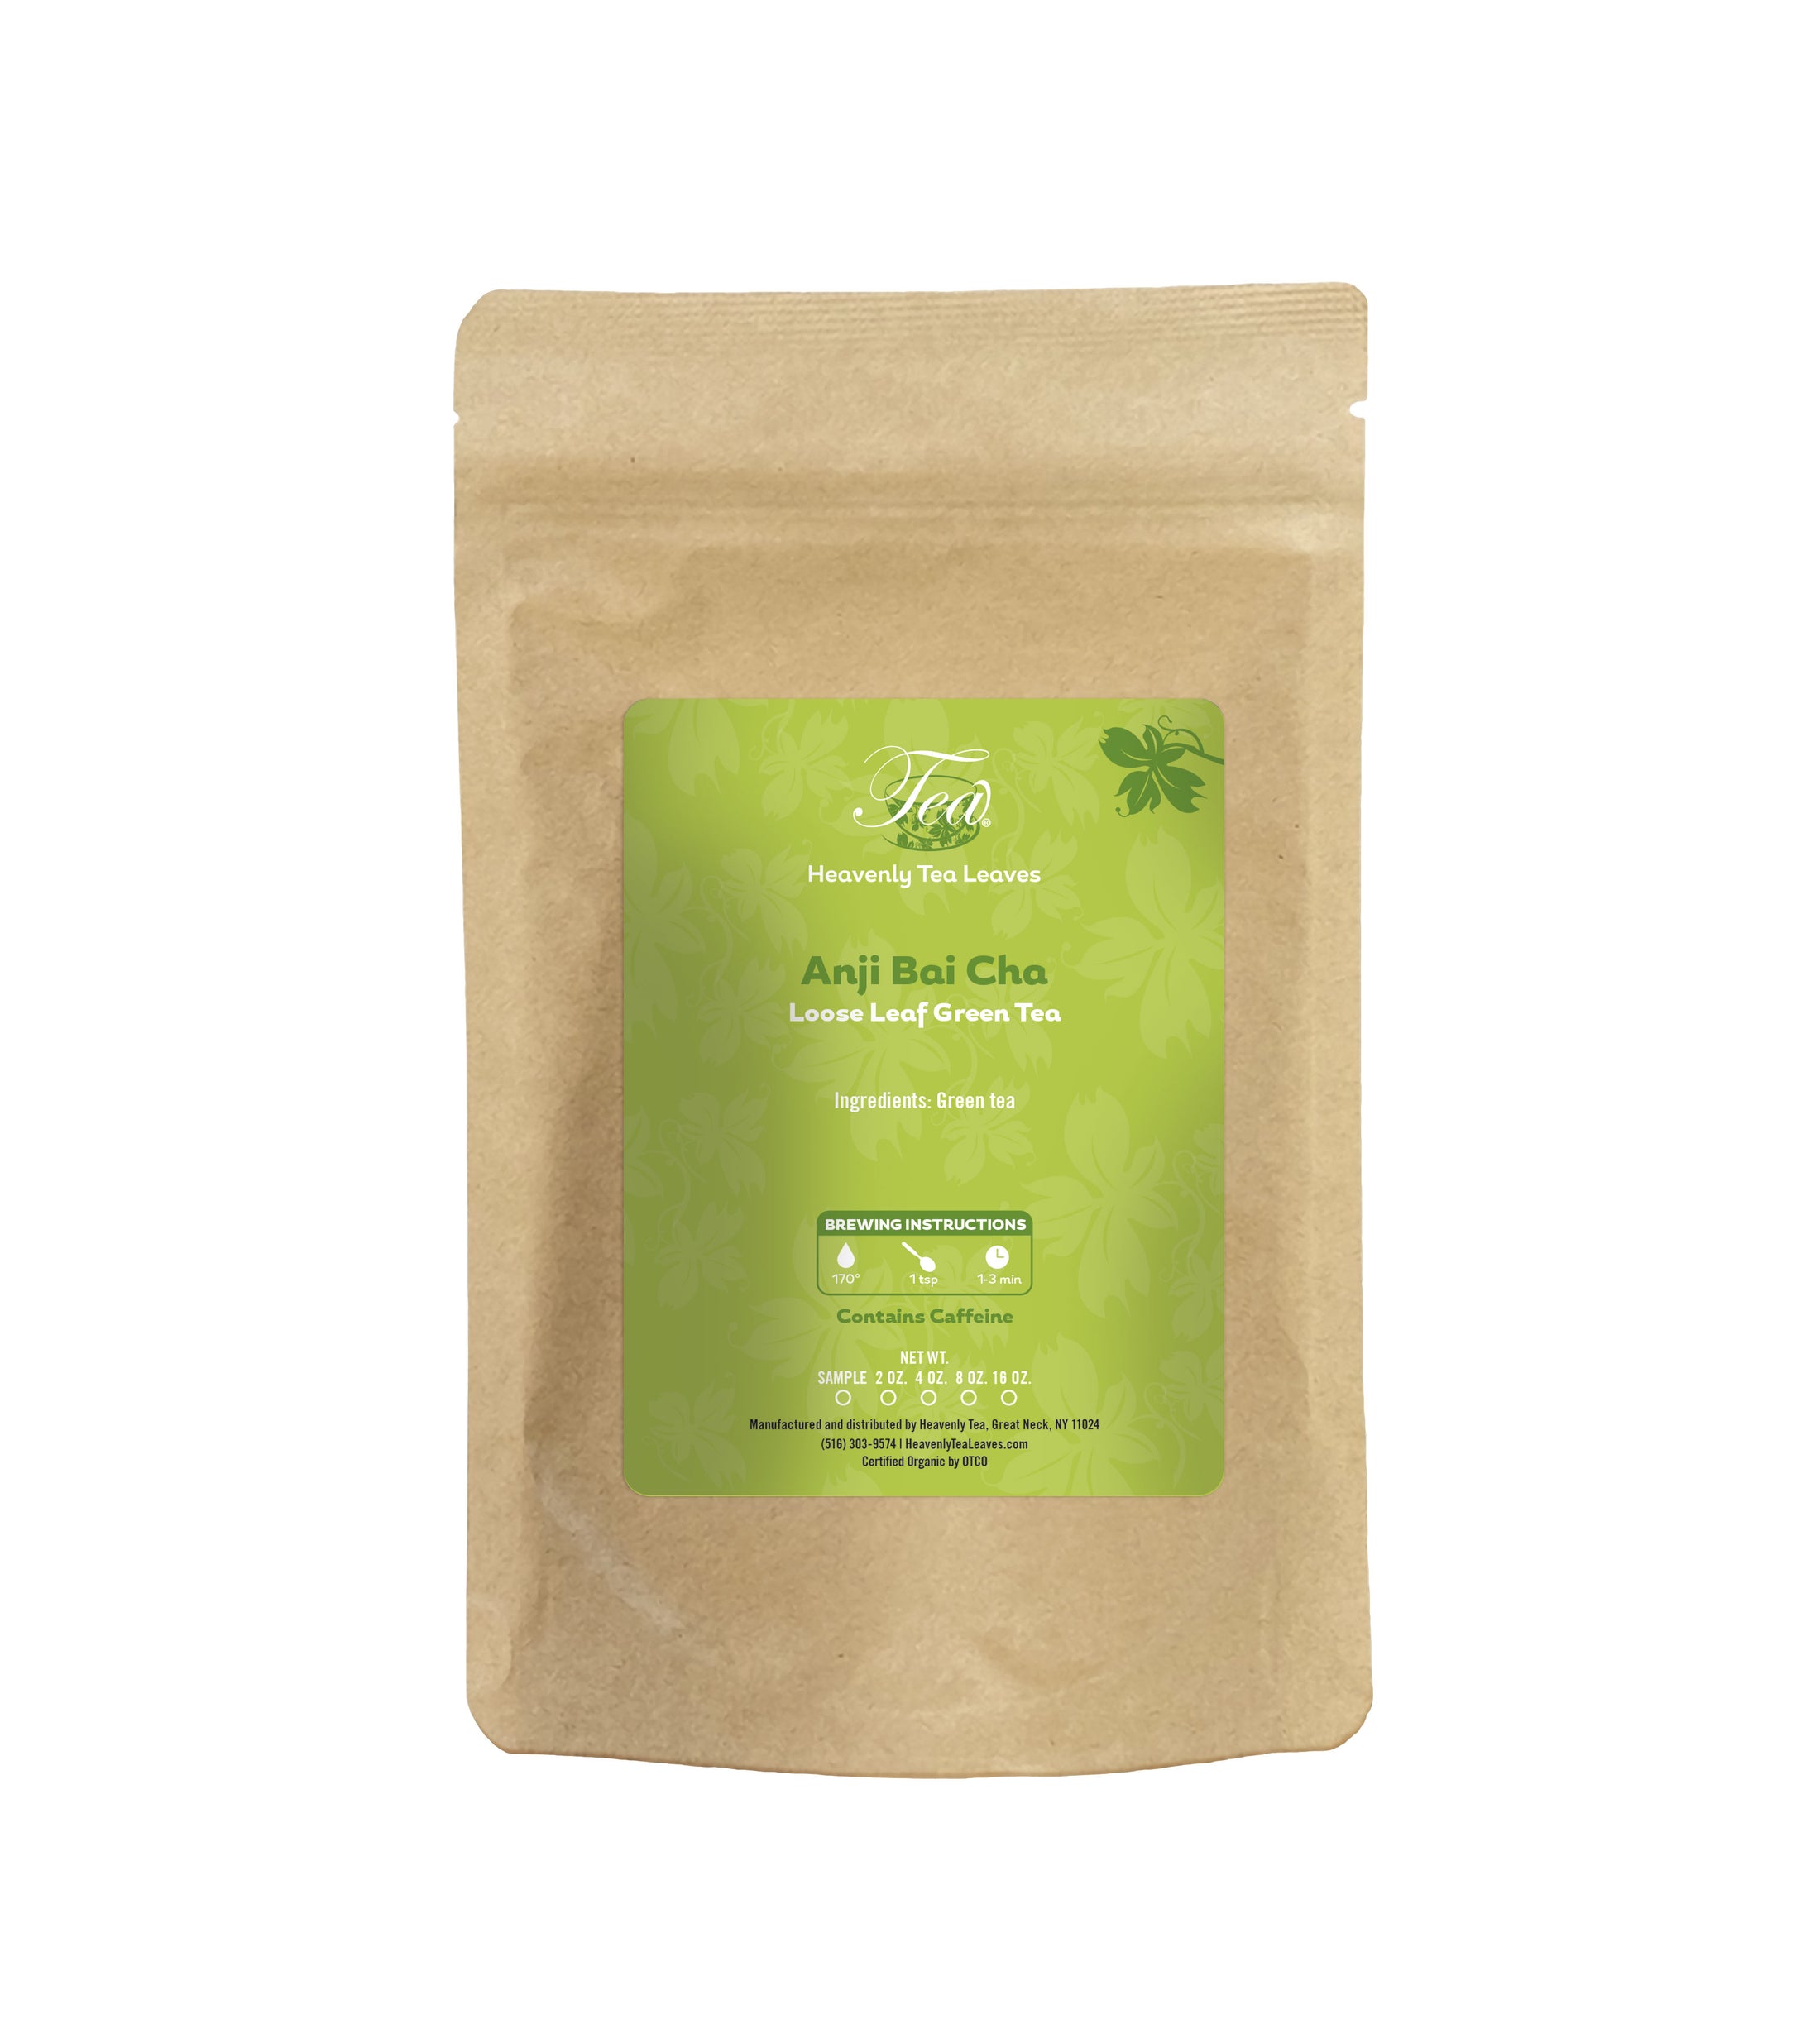  Anji Bai Cha - Premium Loose Leaf Green Tea | Heavenly Tea Leaves